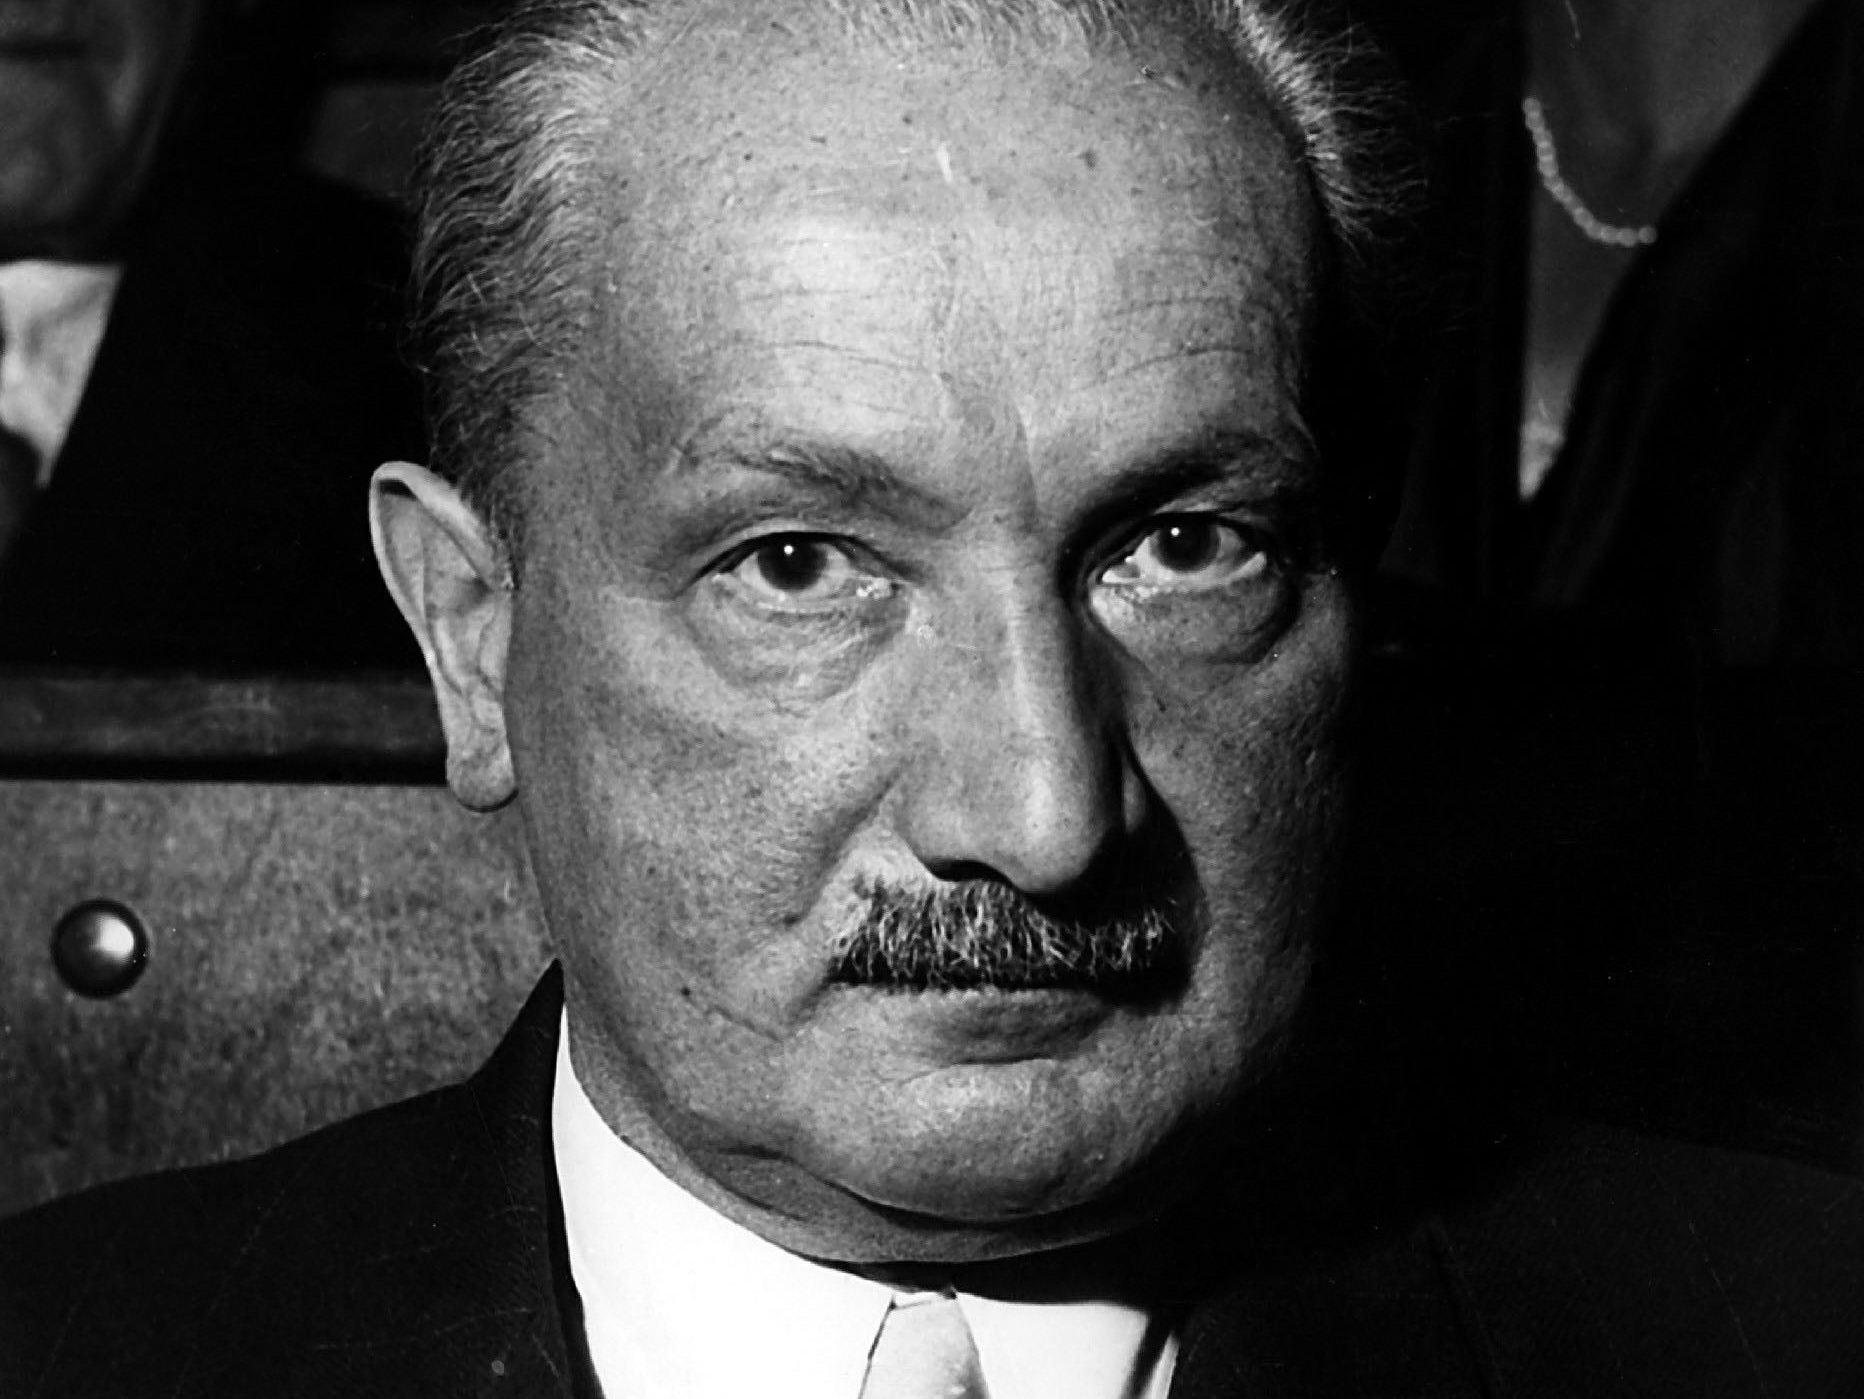 German philosopher Martin Heidegger